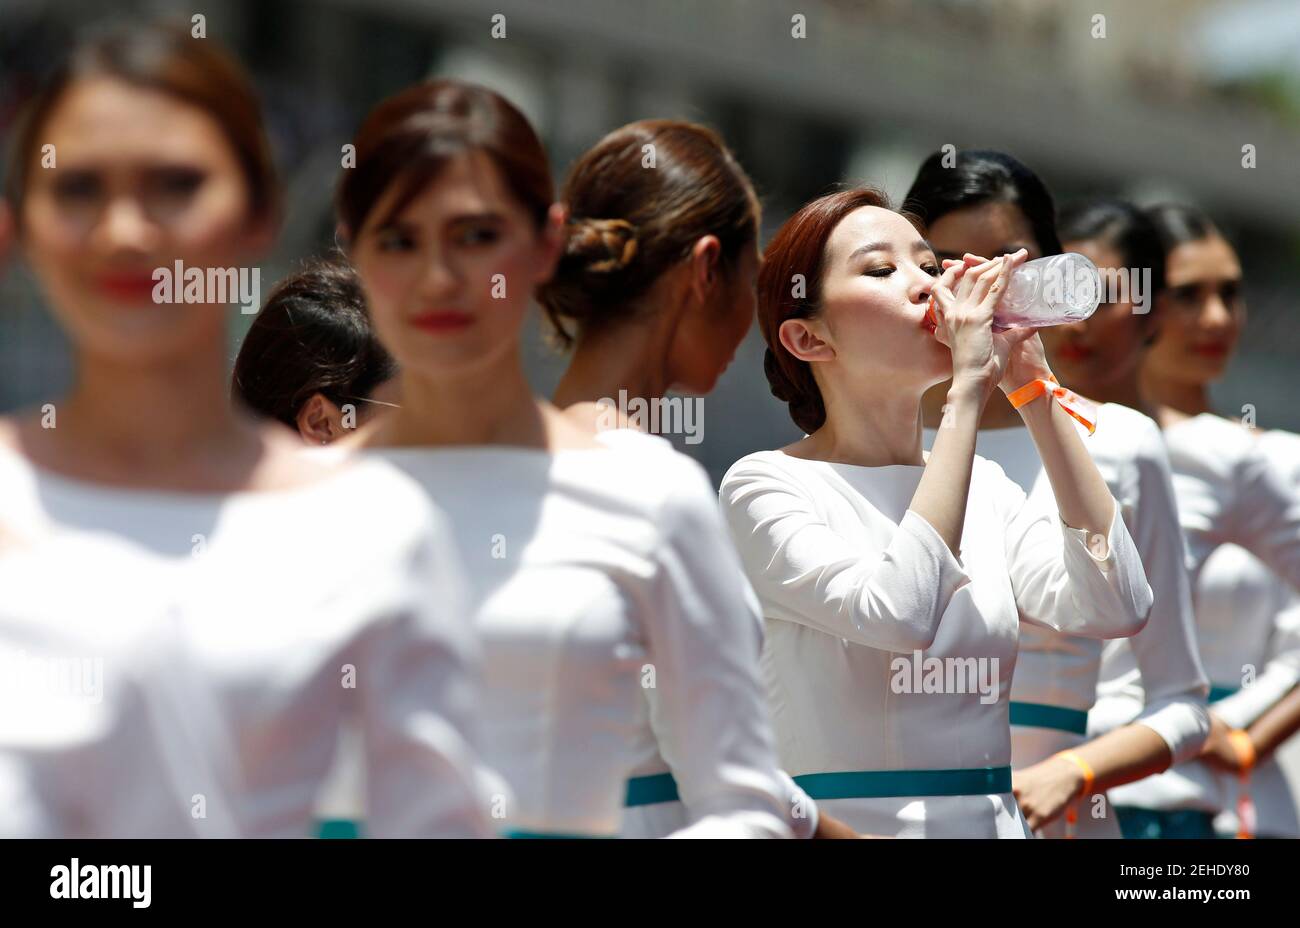 Formula One - F1 - Malaysian Grand Prix 2015 - Sepang International Circuit, Kuala Lumpur, Malaysia - 29/3/15  A pit lane girl takes a drink of water before the race  Reuters / Olivia Harris  Livepic Stock Photo